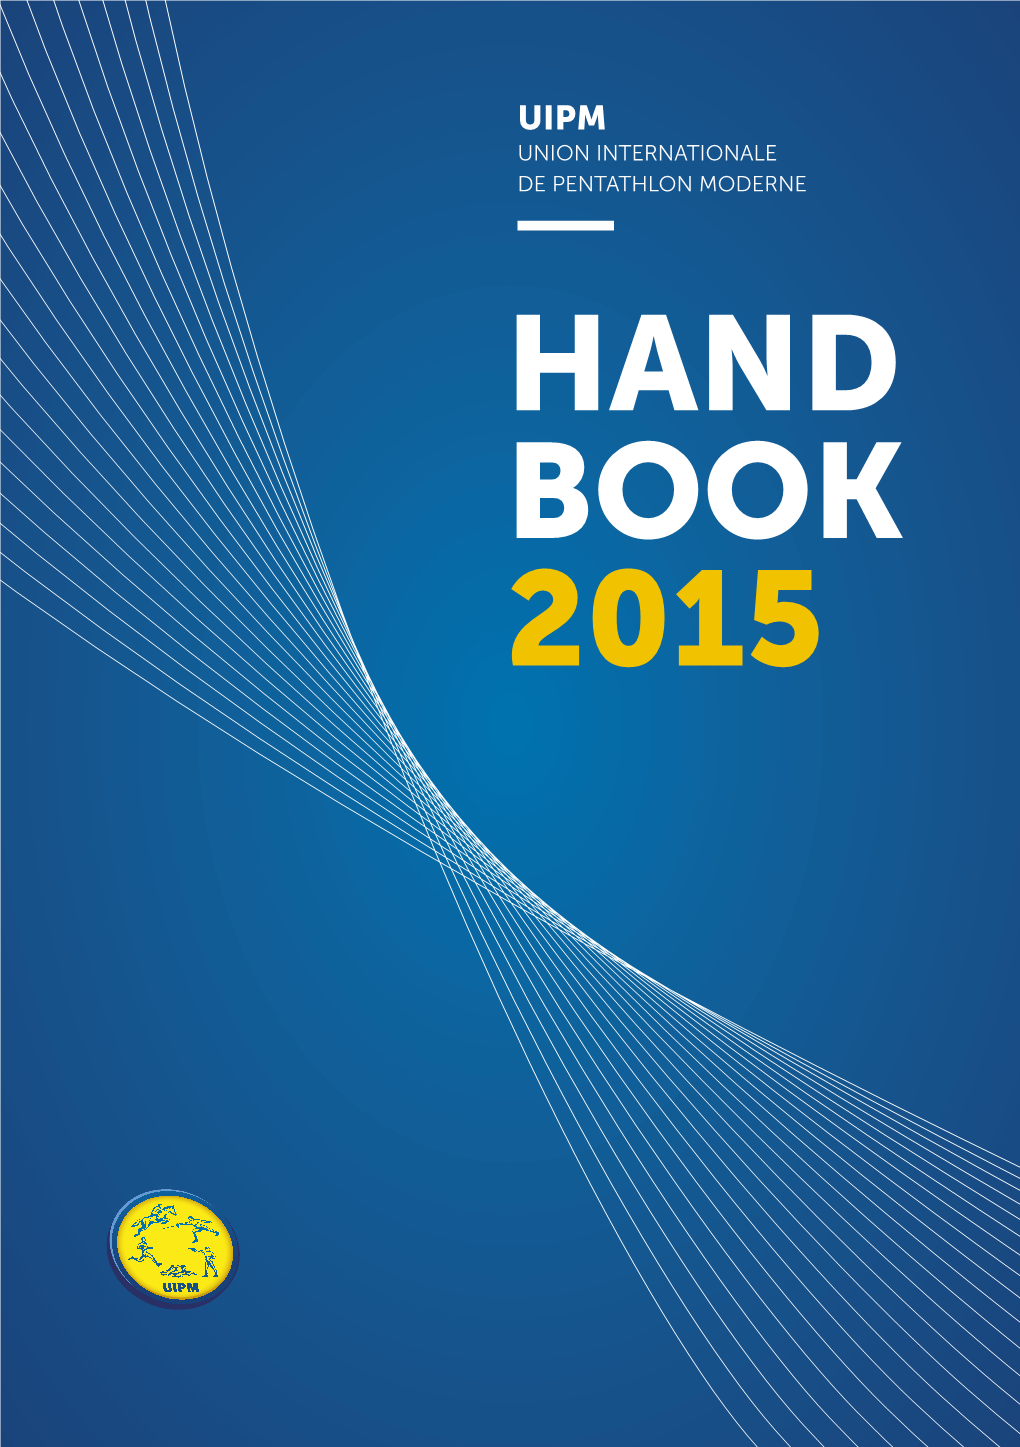 Hand Book 2015 Index